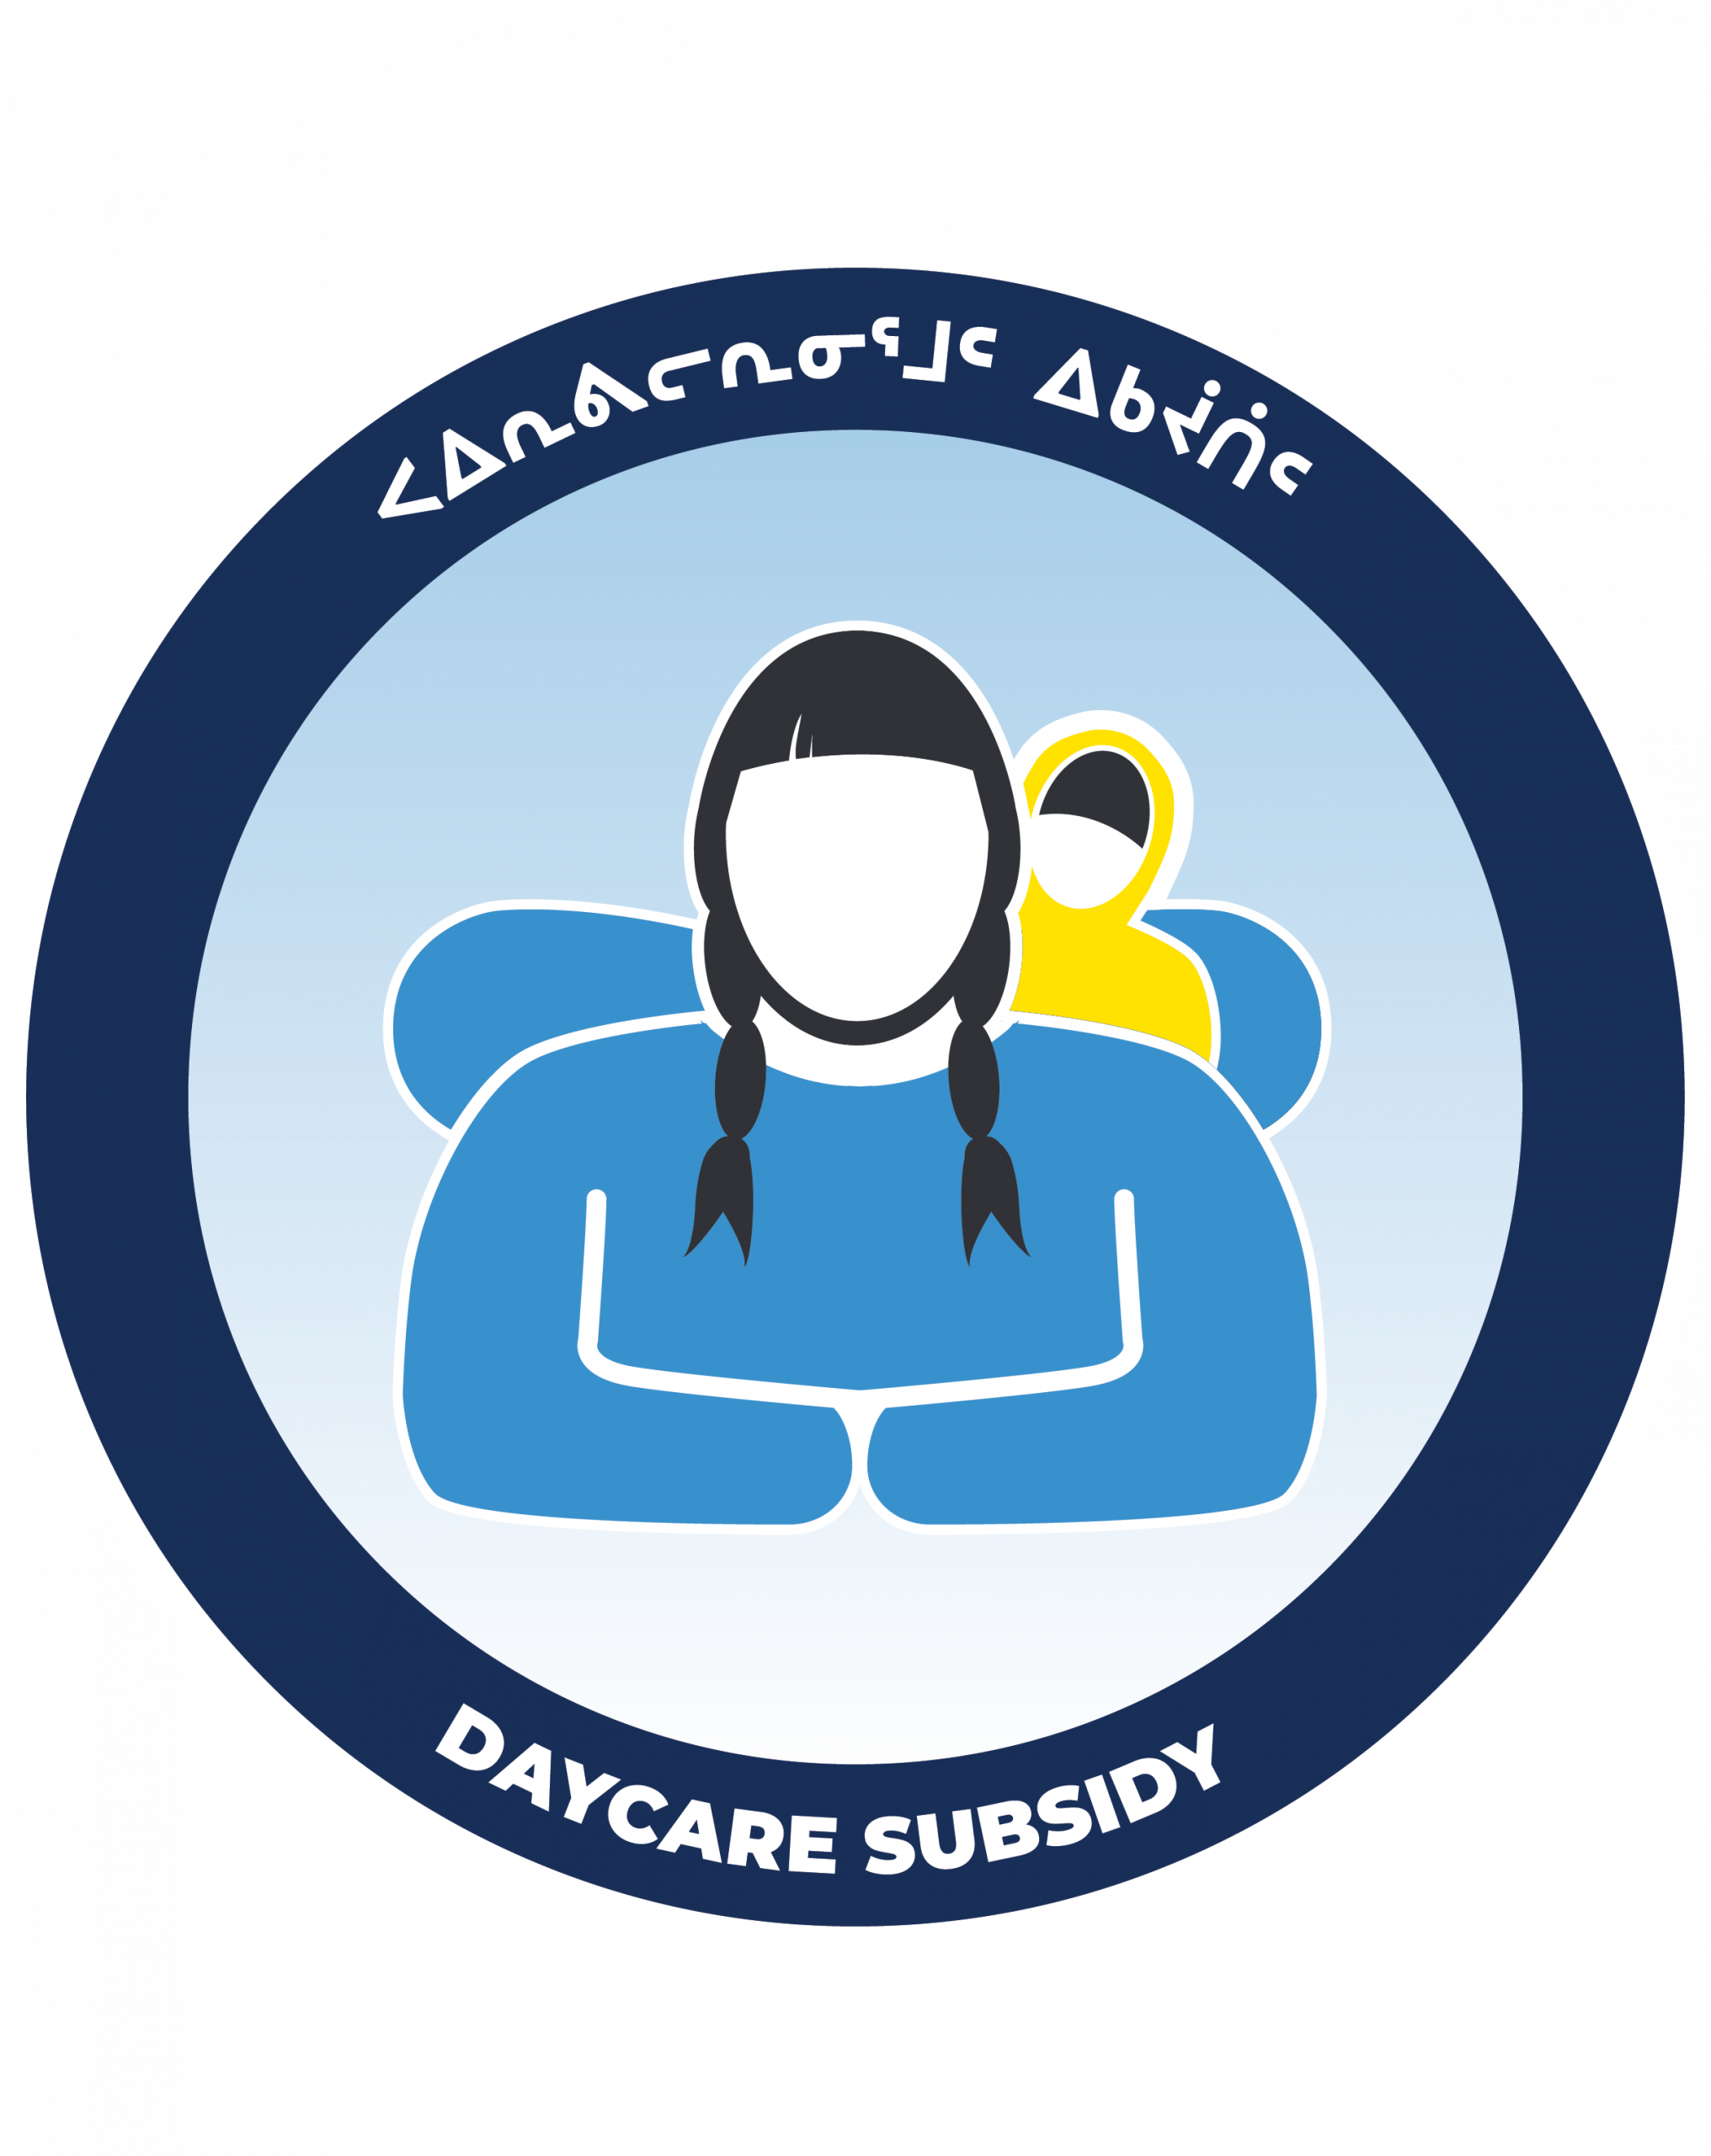 Daycare Subsidy Program